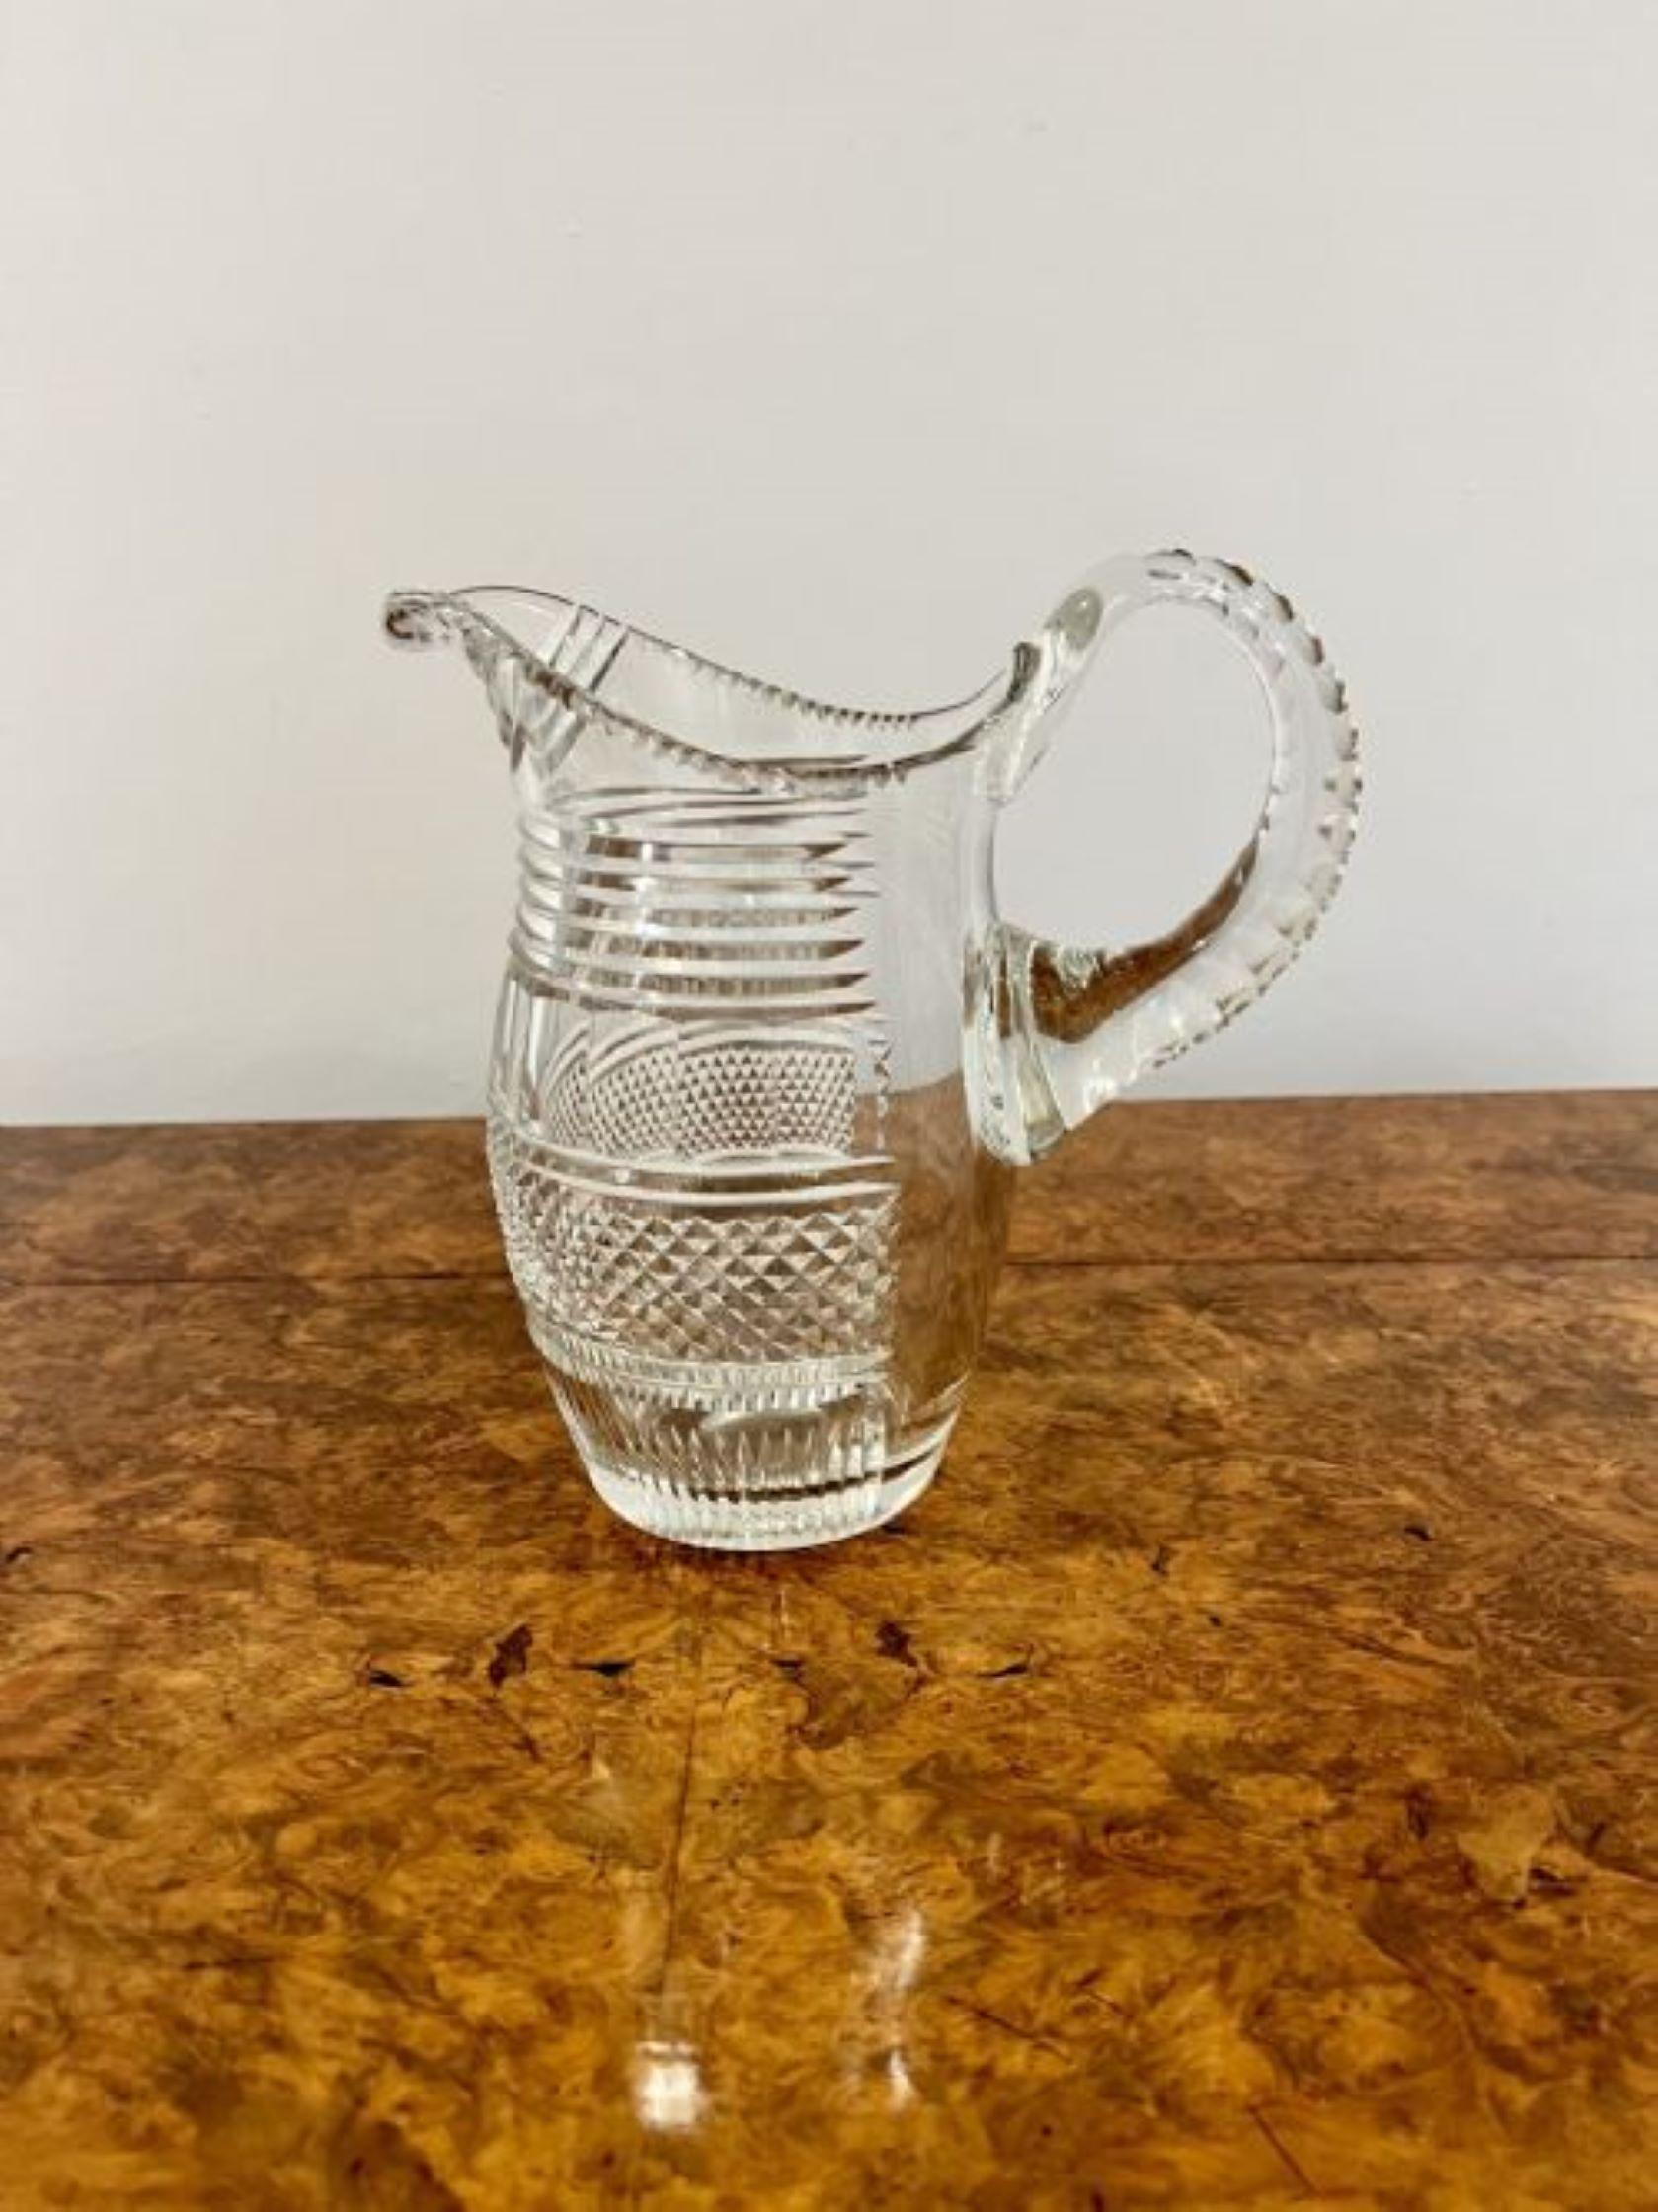 Superb quality antique cut glass water jug having a superb quality cut glass water jug with a shaped handle